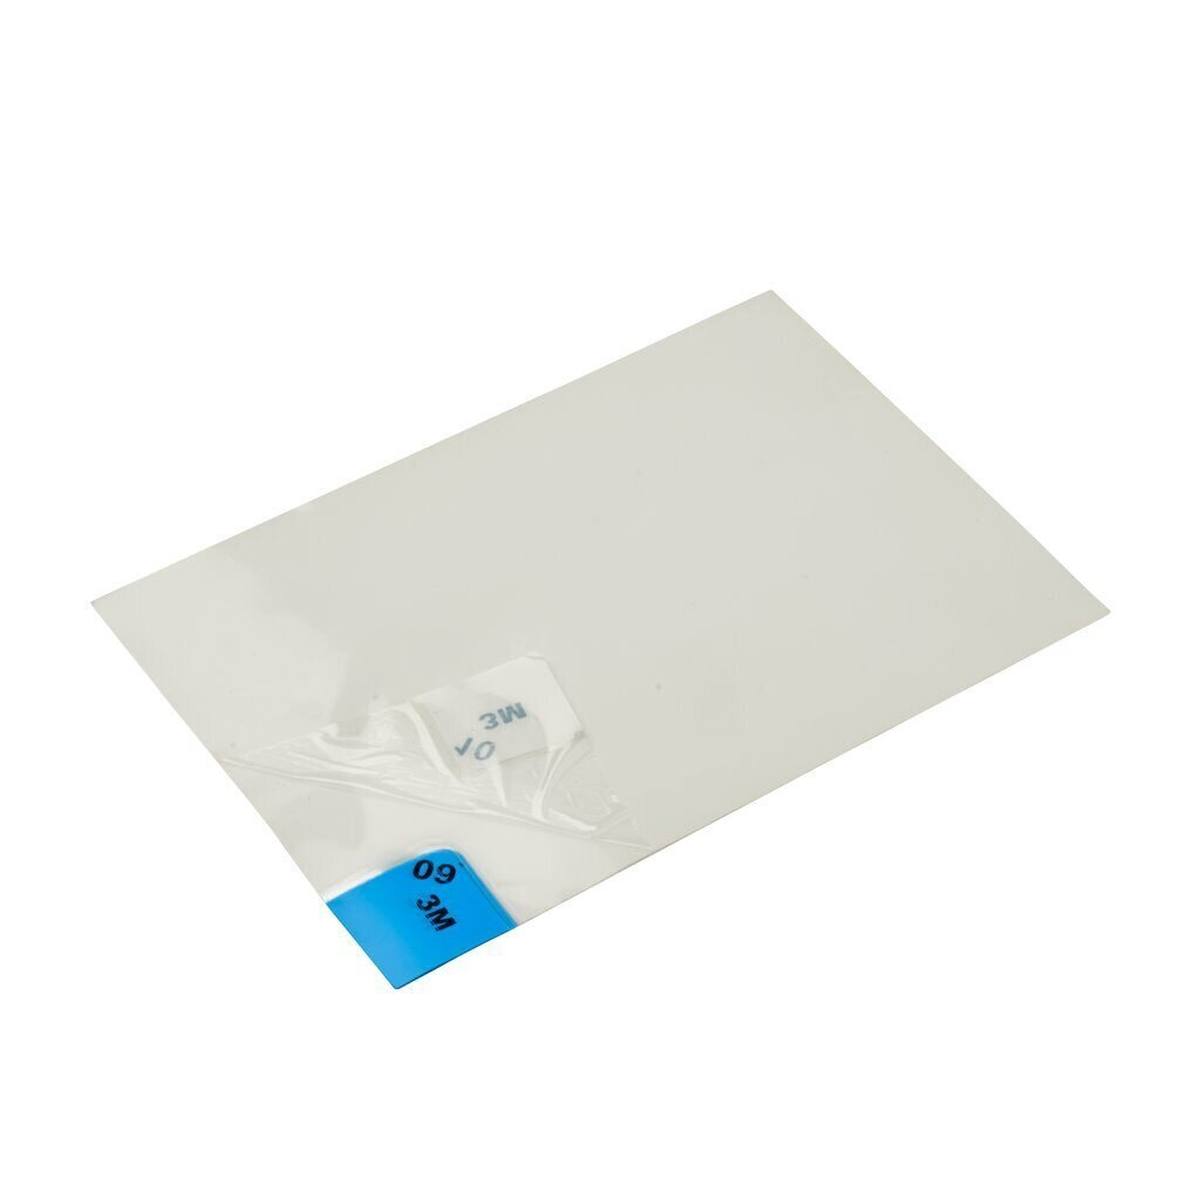 3M 4300 Nomad fine dust adhesive mat, white, 1.15m x 0.45m, 40 transparent polyethylene layers